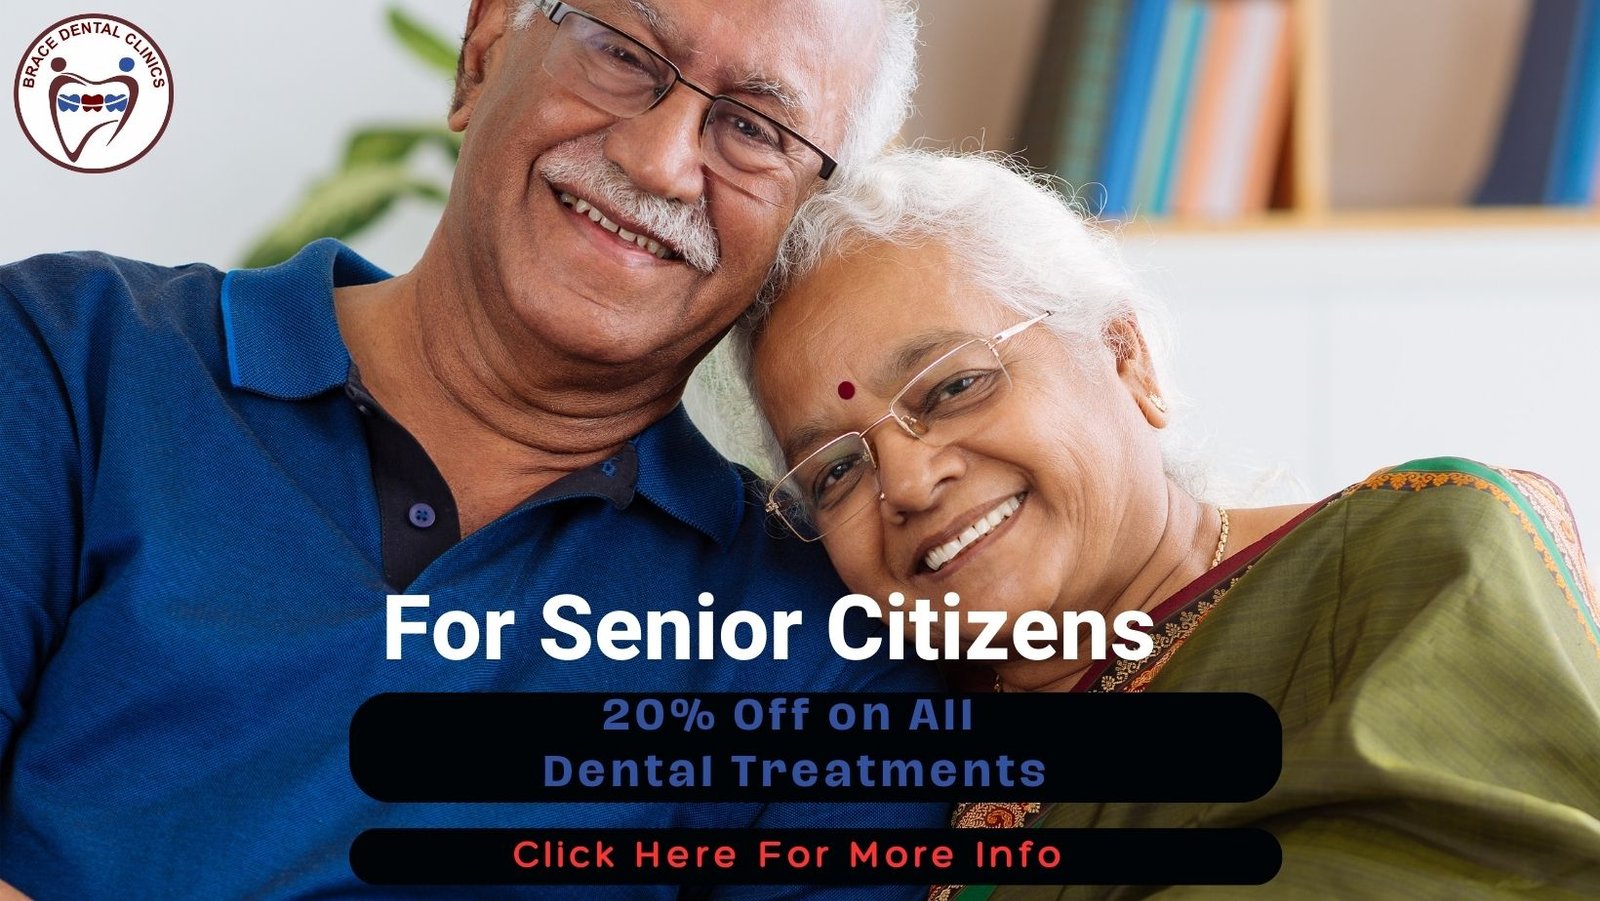 Discount for Senior Citizens